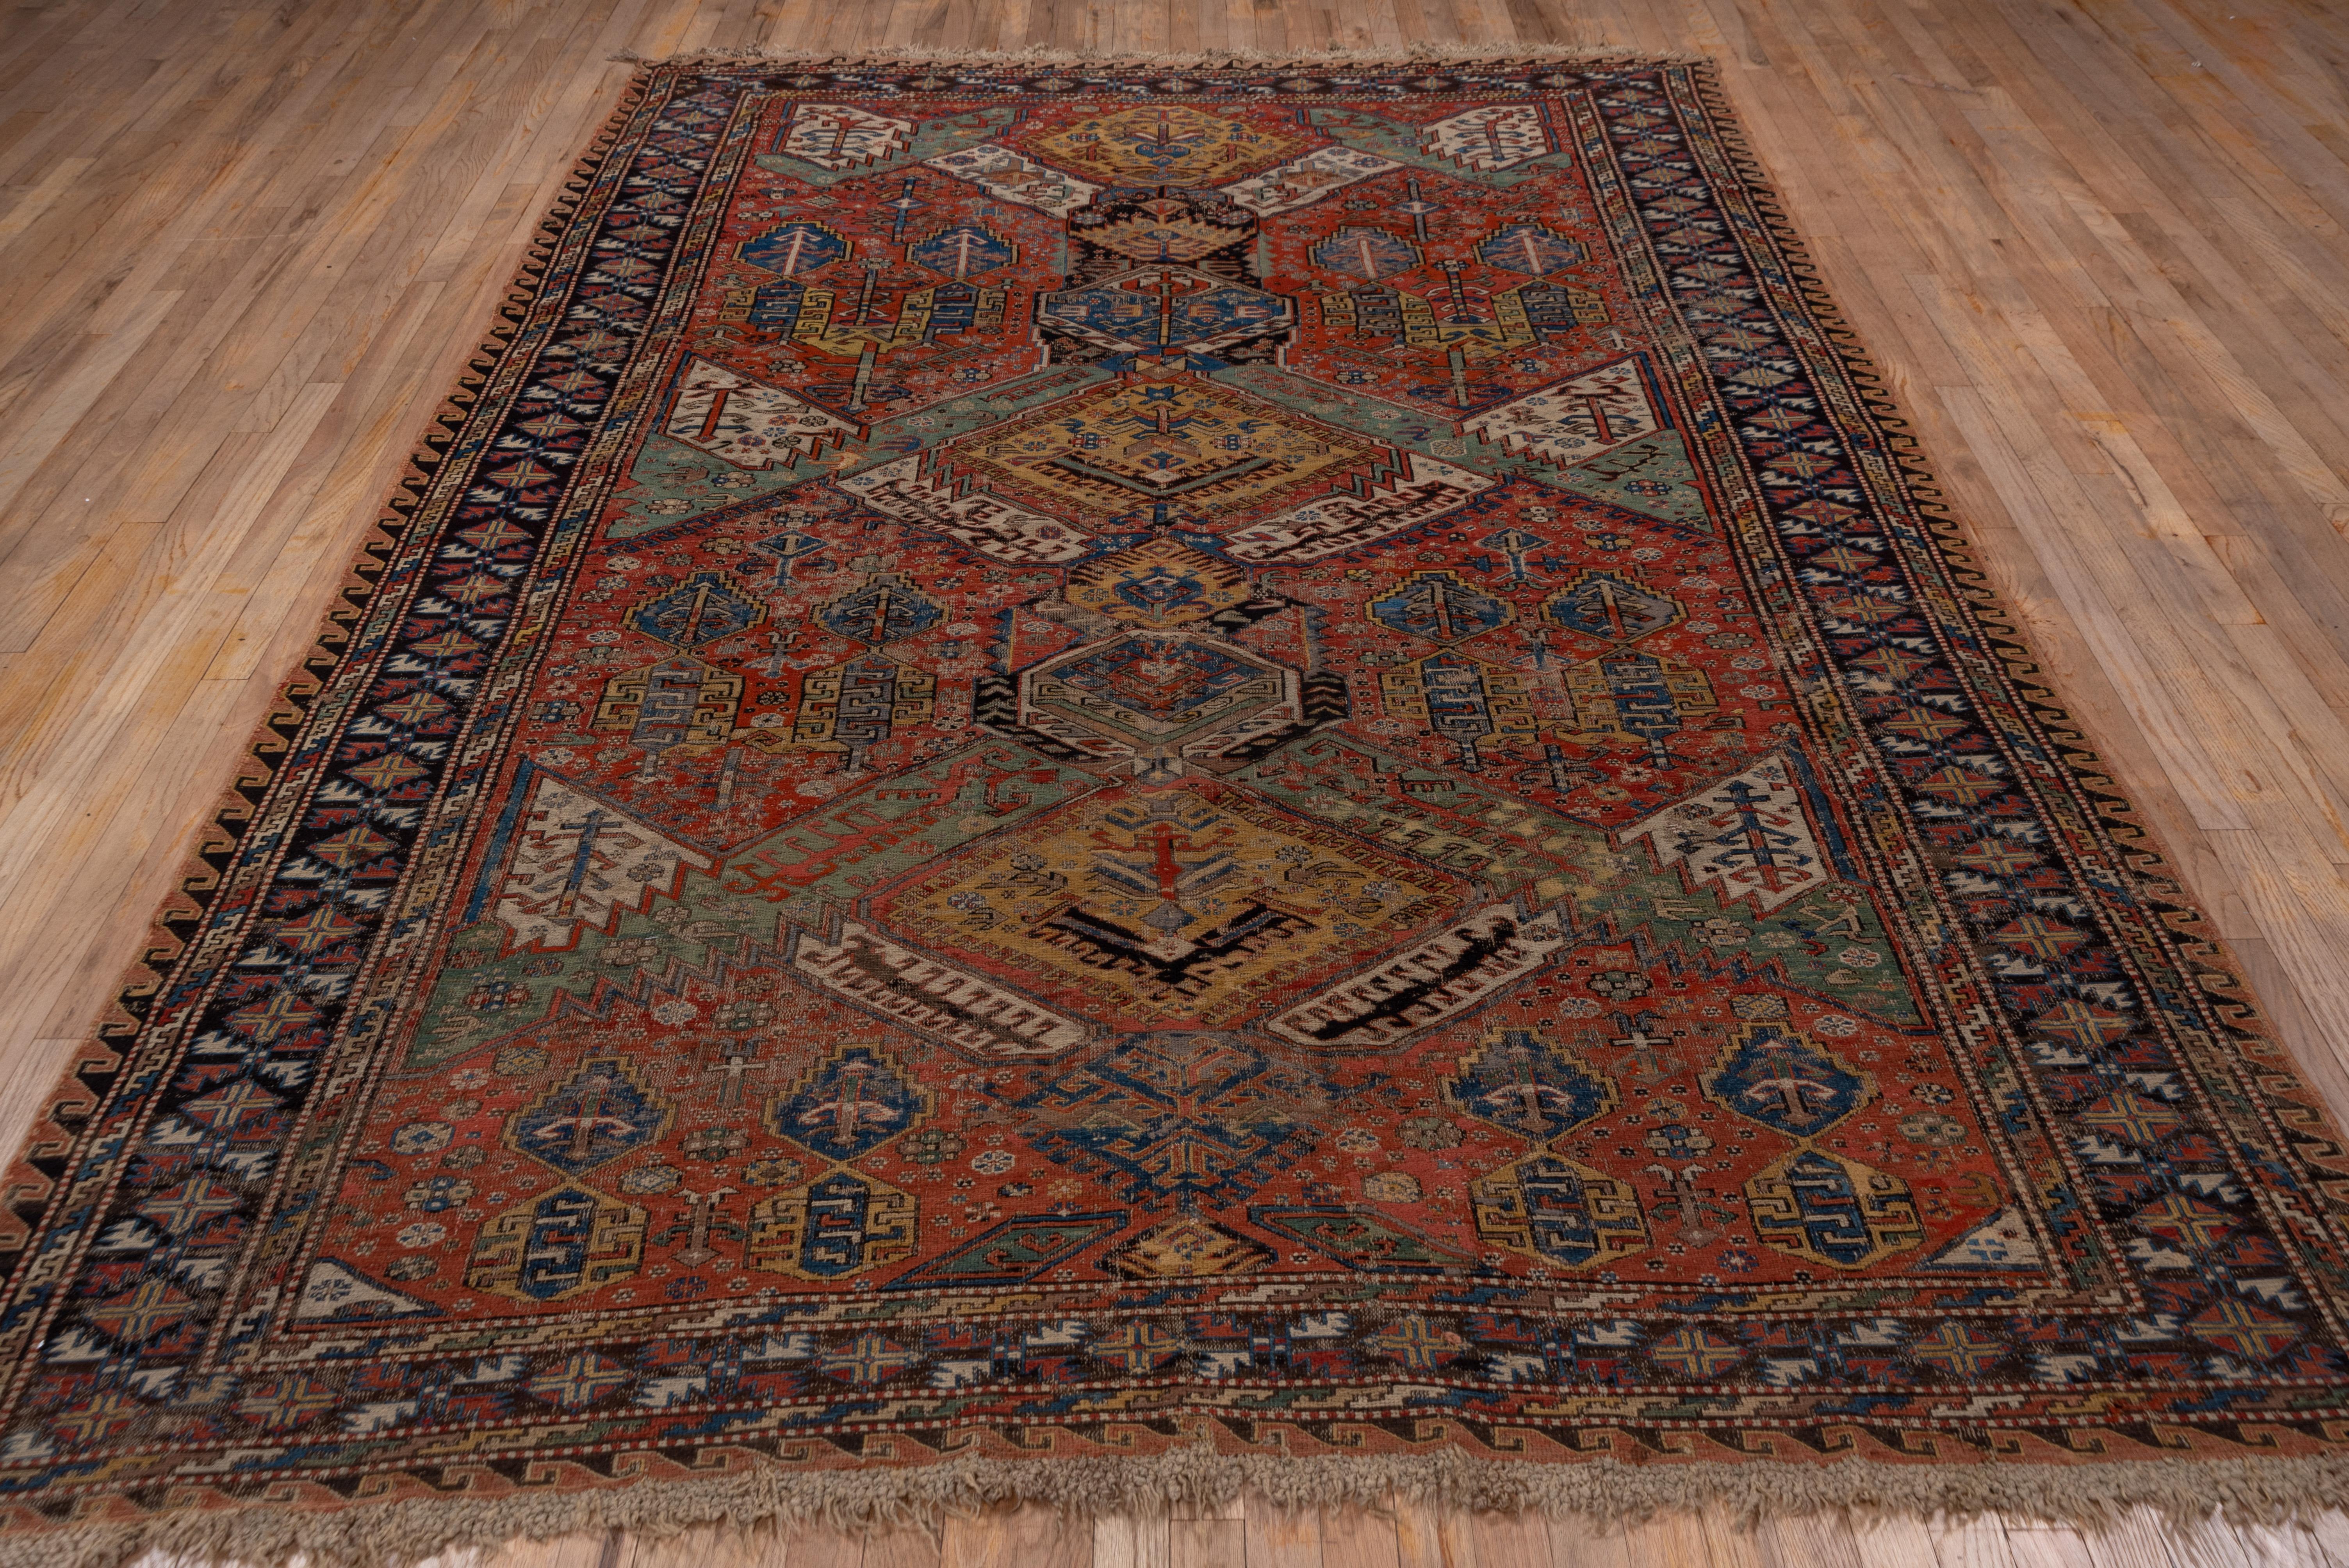 Hand-Woven Antique Kuba Caucasian Sumak Carpet, Late 19th Century Handwoven, Colorful For Sale